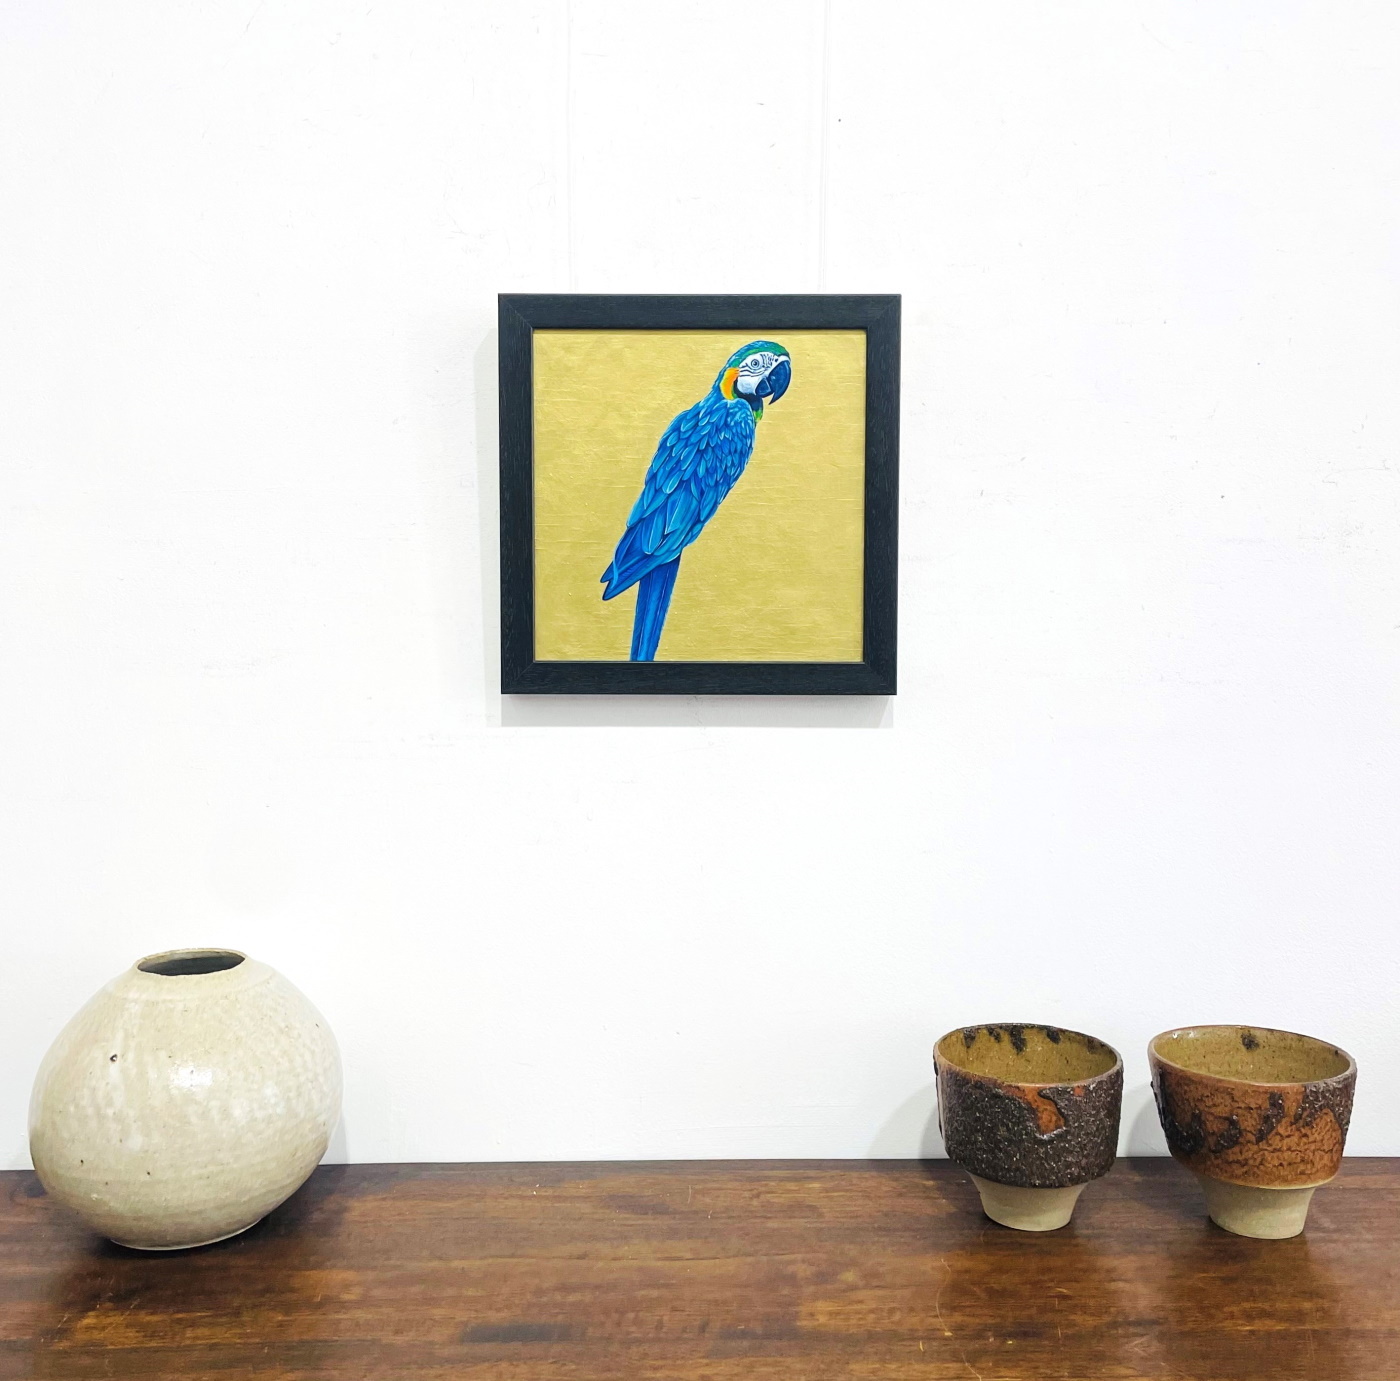 'Blue Parrot' by artist Victoria Heald